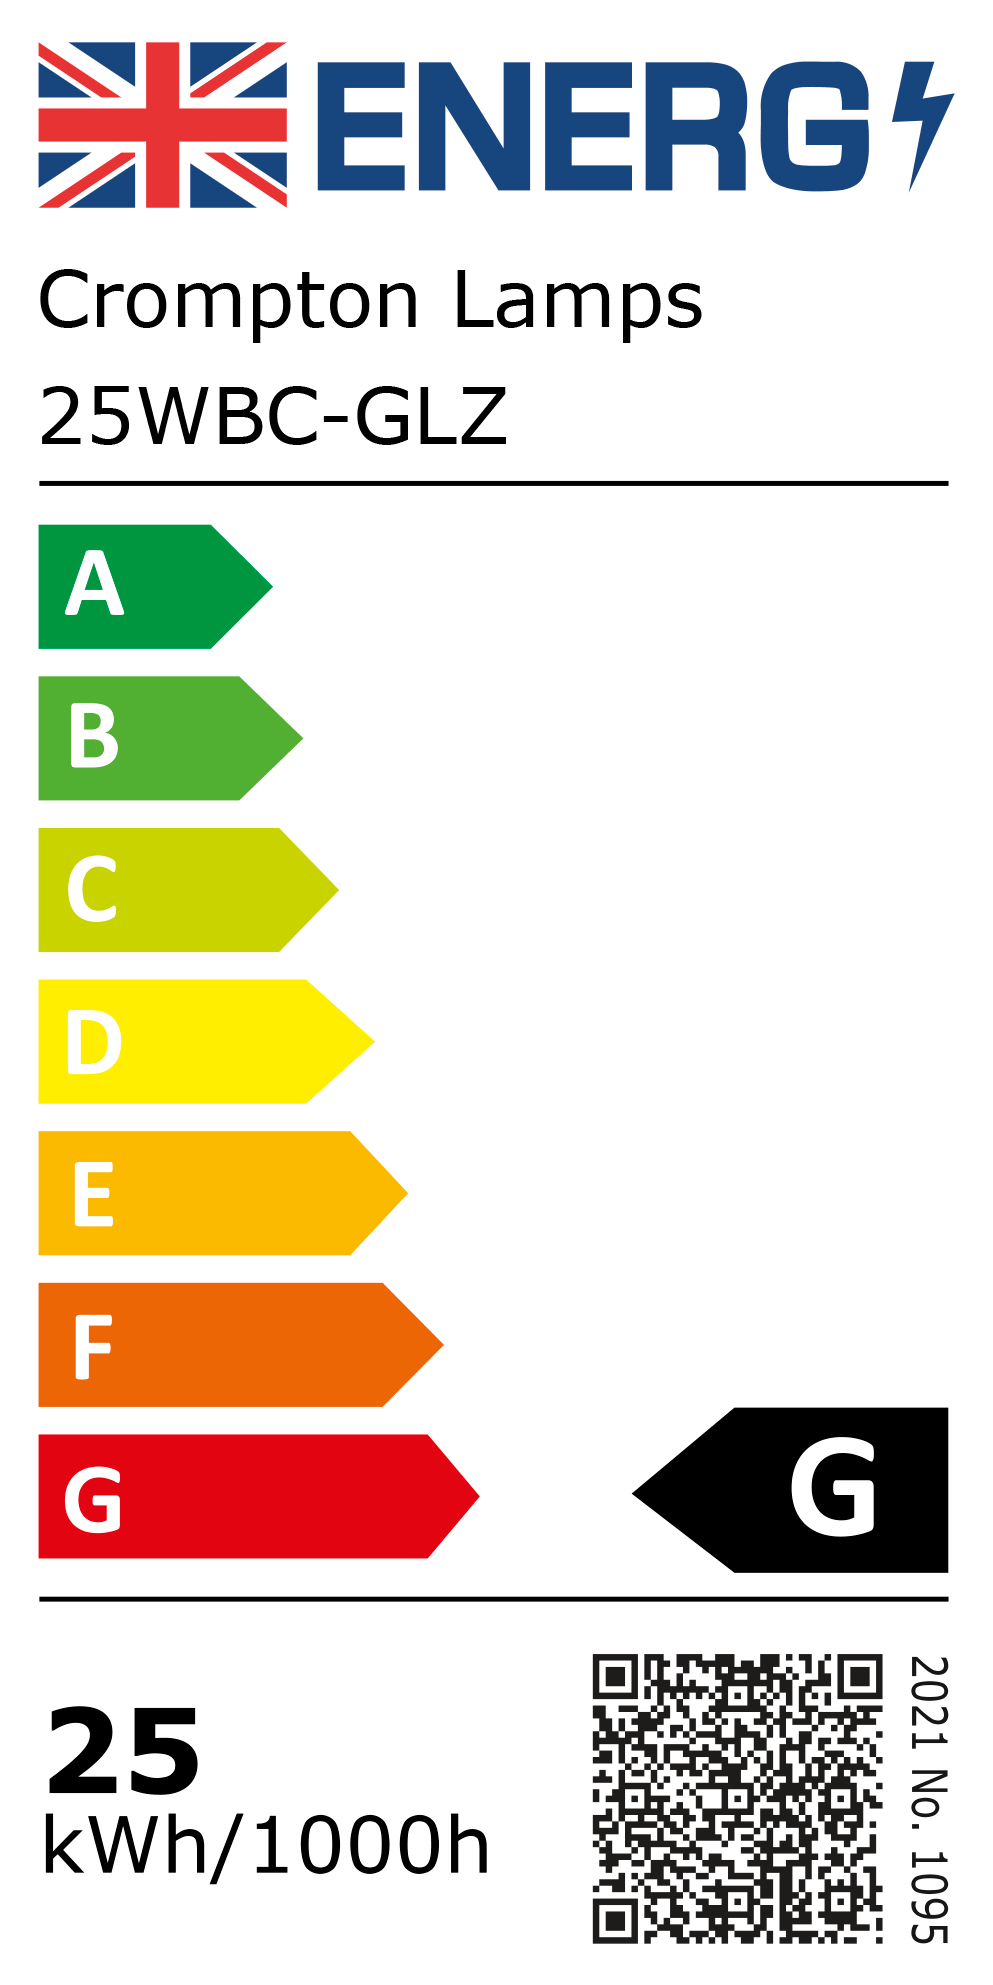 New 2021 Energy Rating Label: Stock Code 25WBC-GLZ